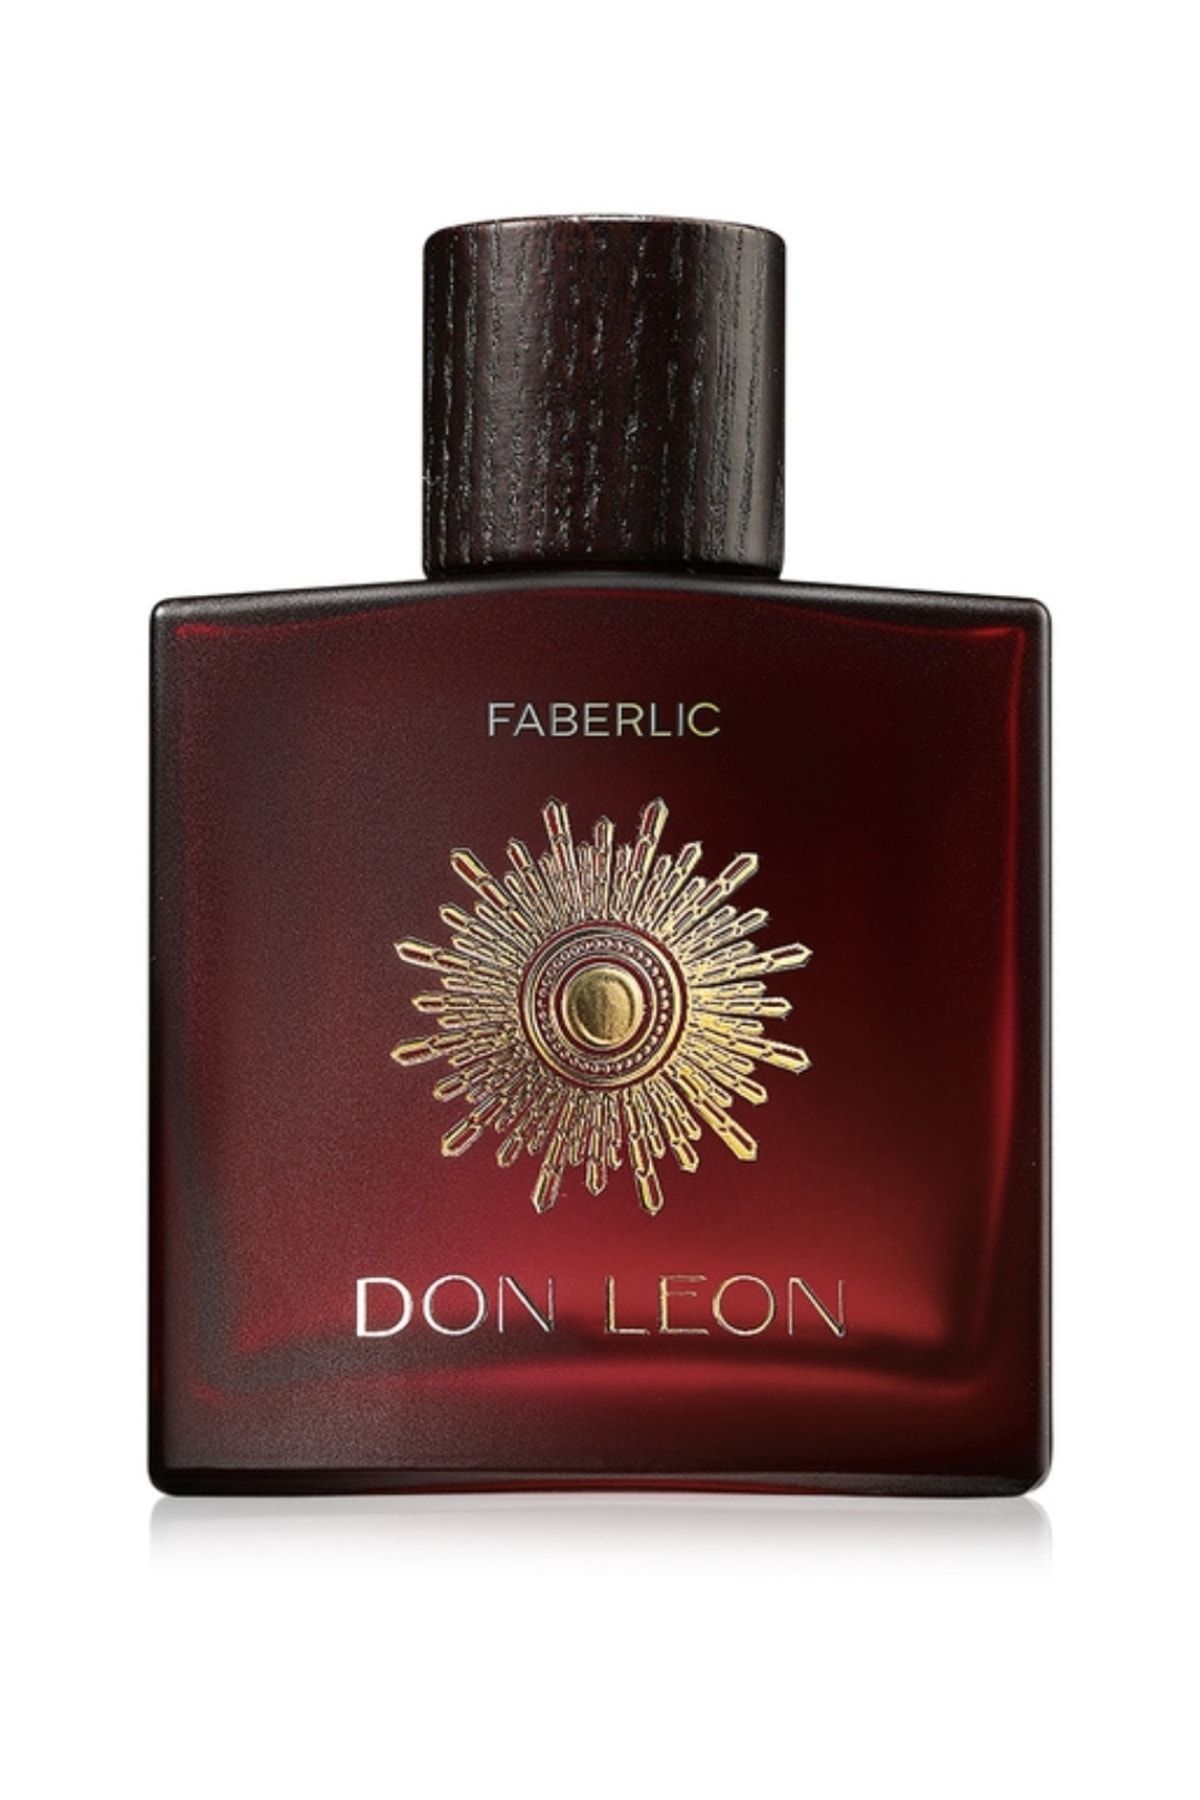 Faberlic Don Leon Erkek Edt 100 ml Parfüm - 46911111119